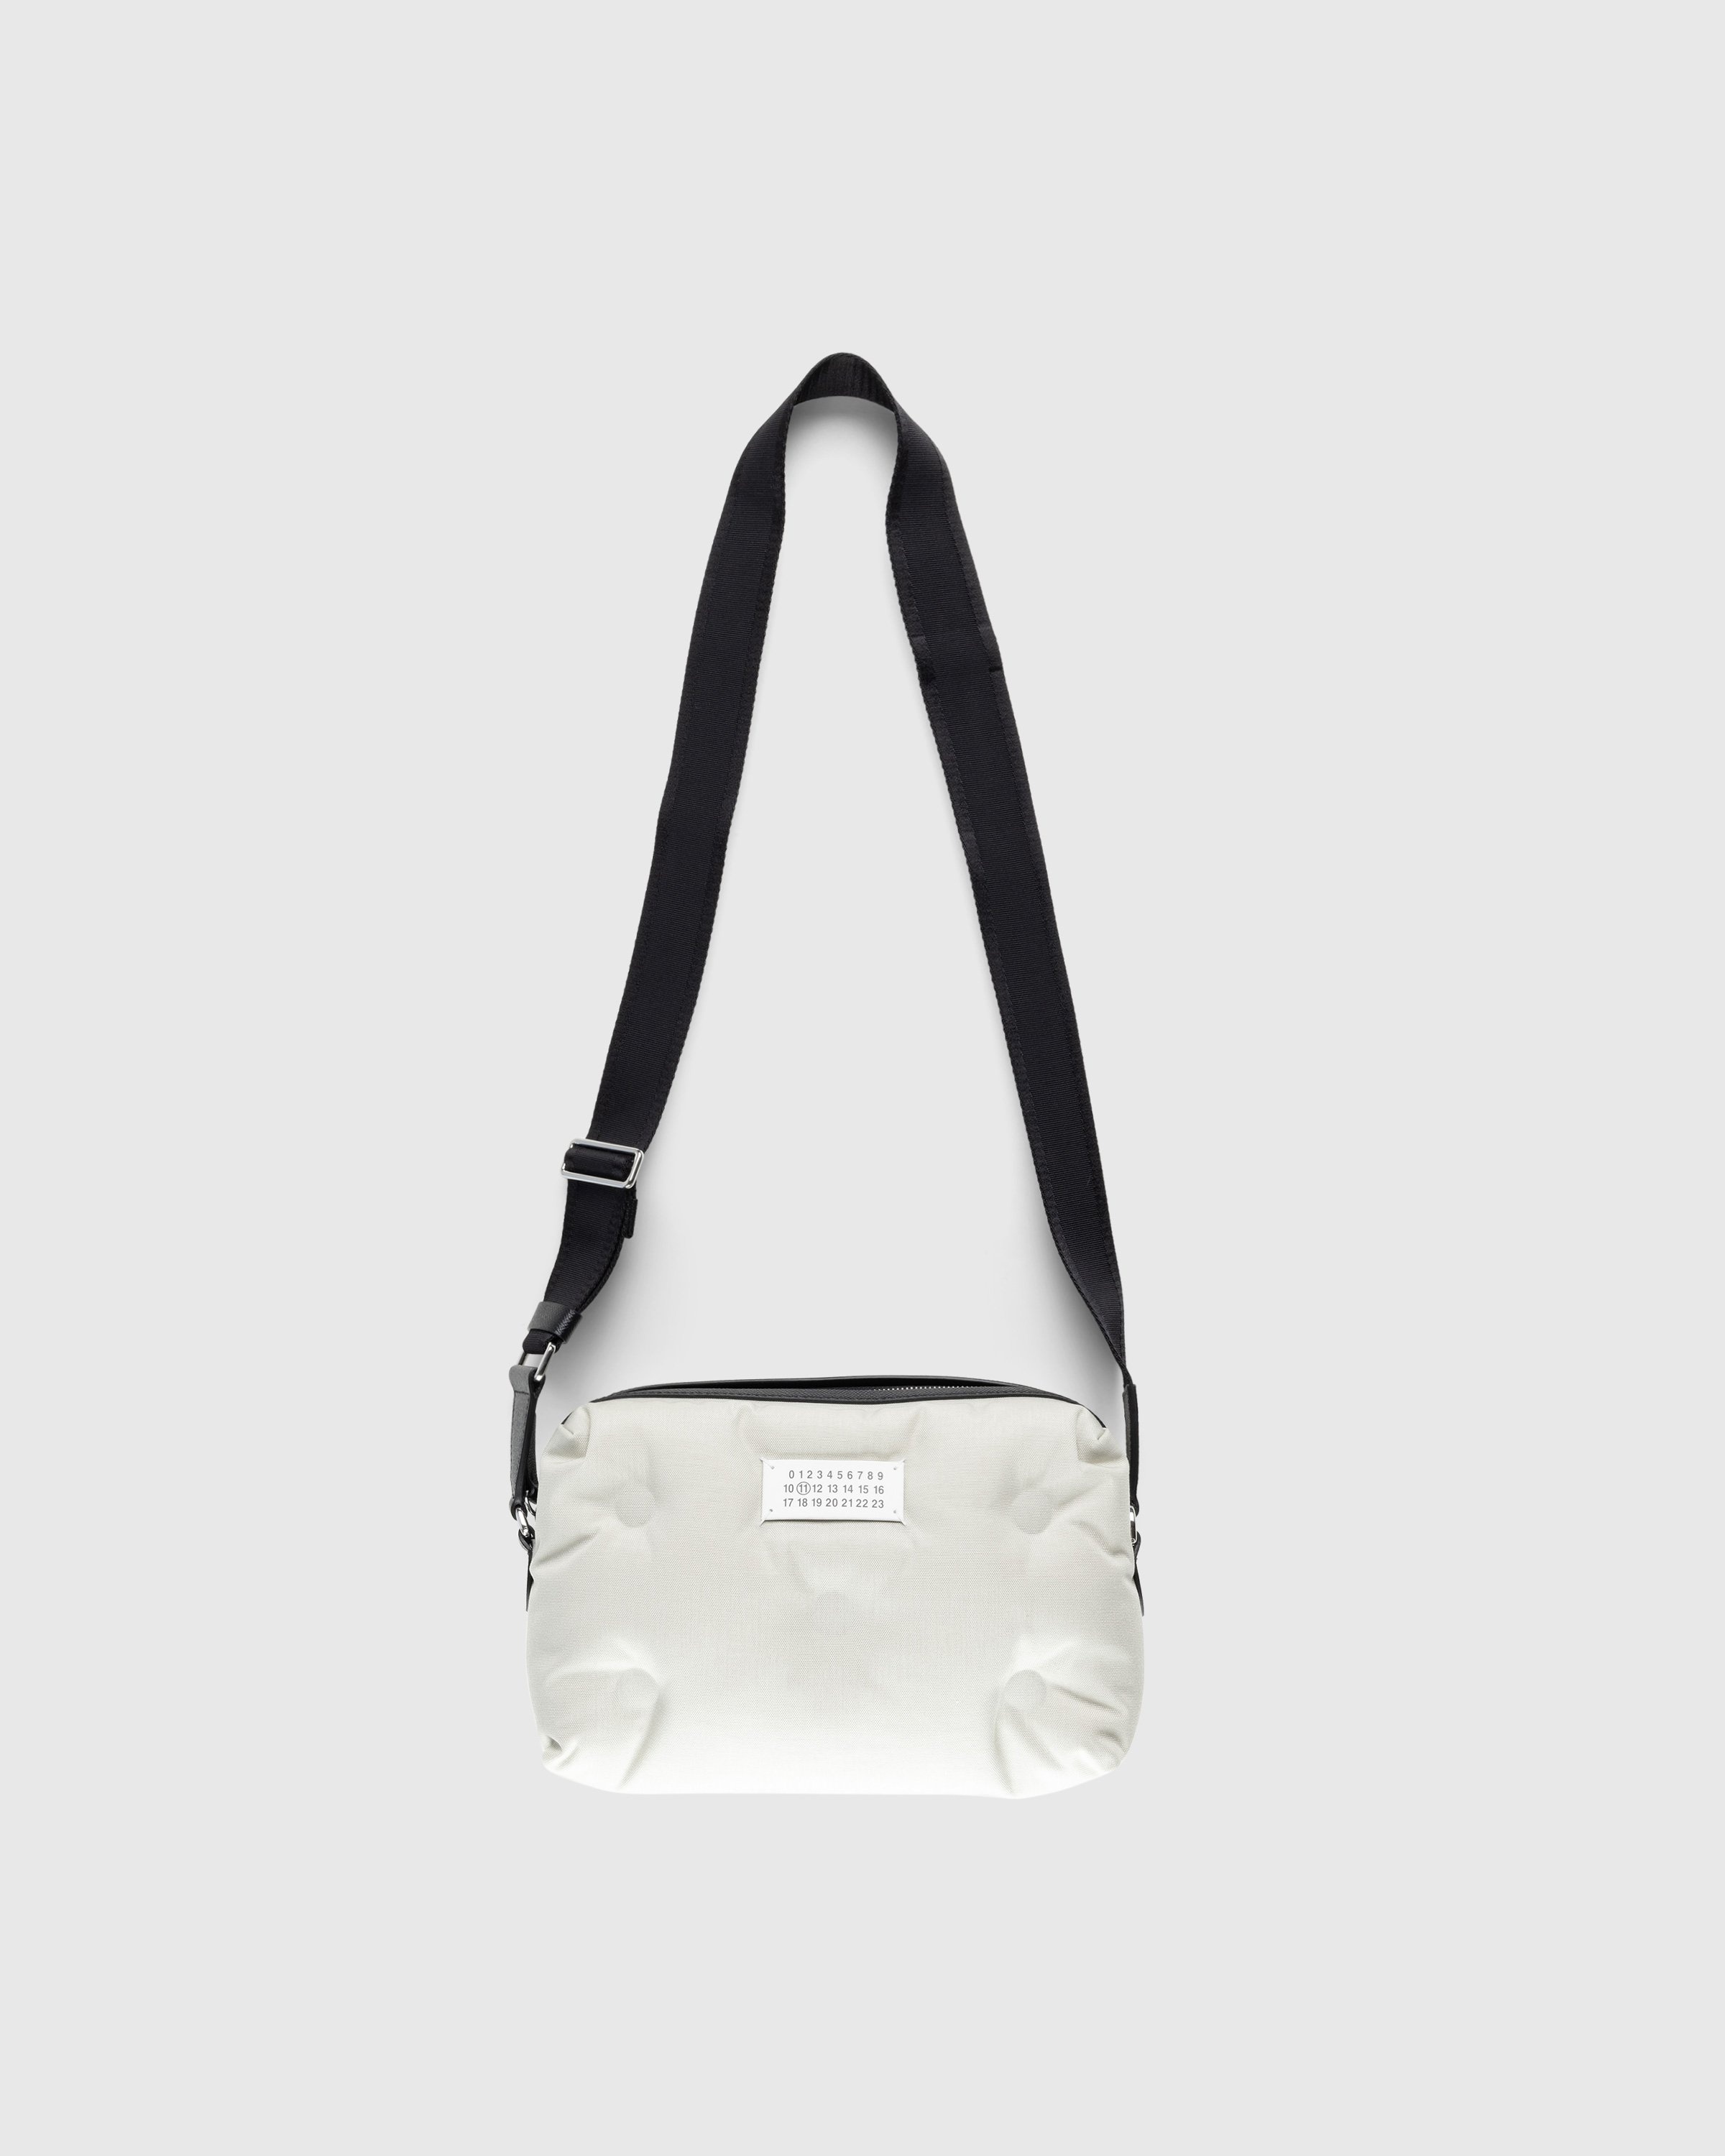 DOURR Hobo Handbags Light Nylon Crossbody Bag for Women, Multi Compartment Tote Purse Bags